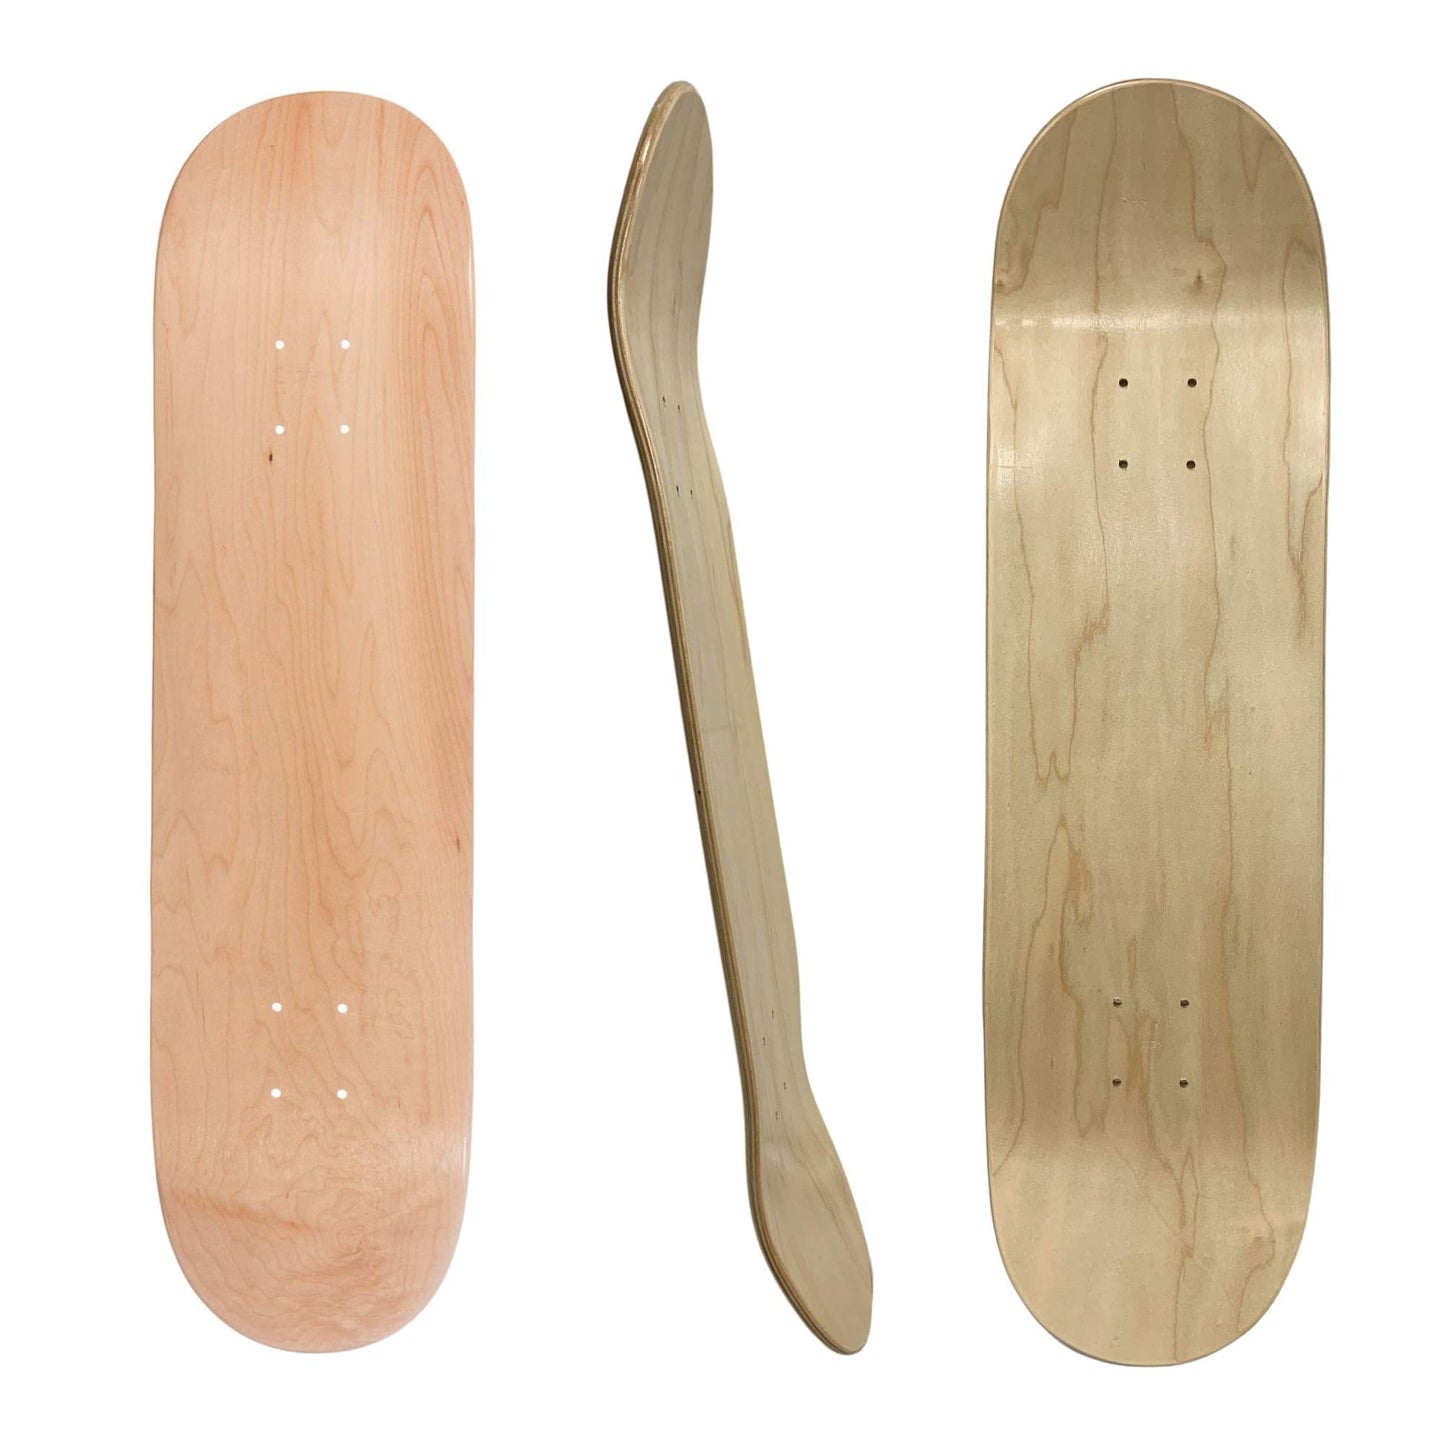 Premium High Quality Maple Skateboard Deck